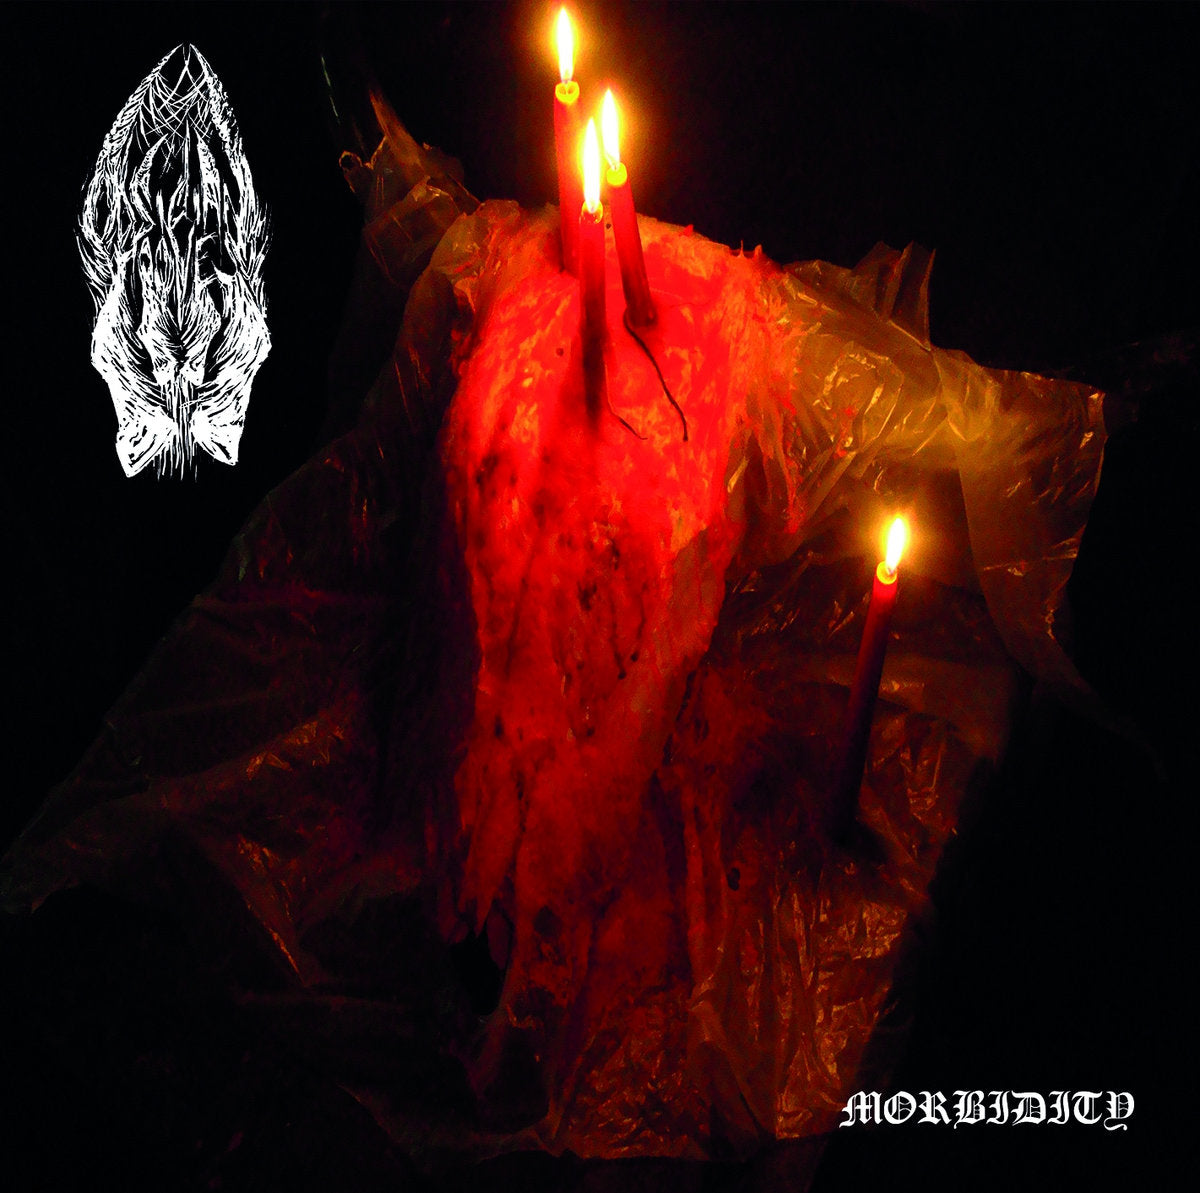 Obsidian Hooves - Morbidity CD